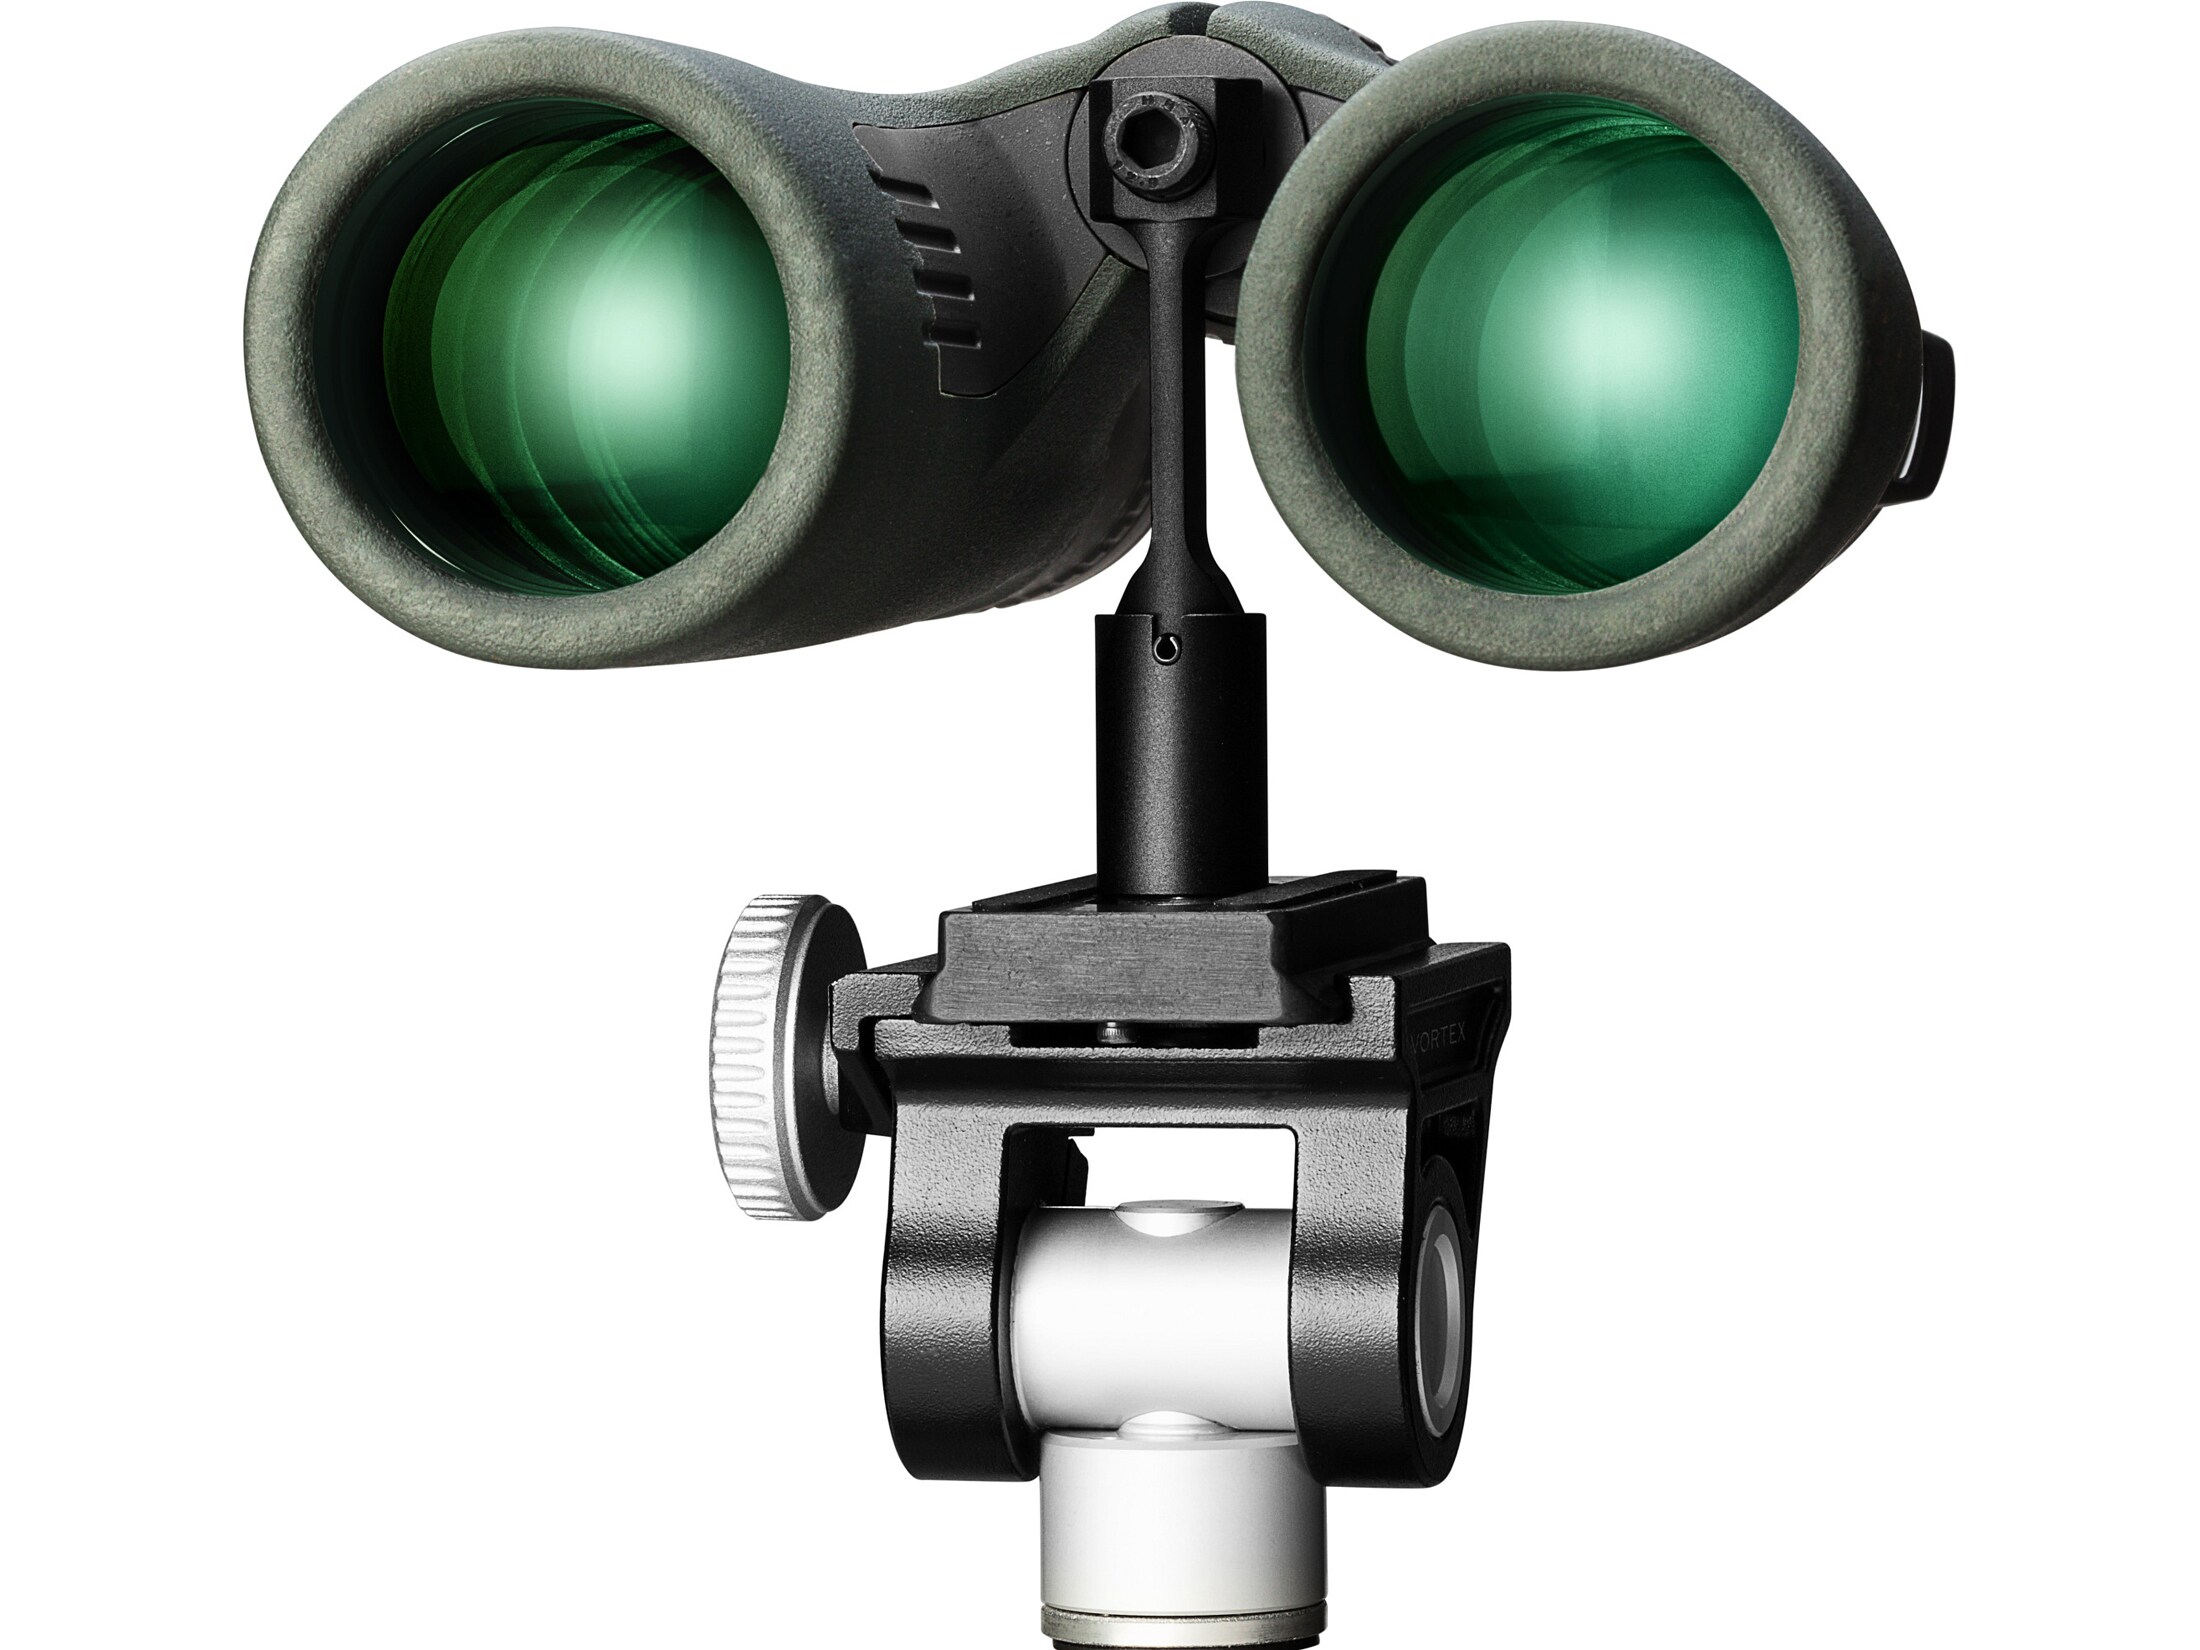 Vortex Optics Sport Binocular Adapter For Sale